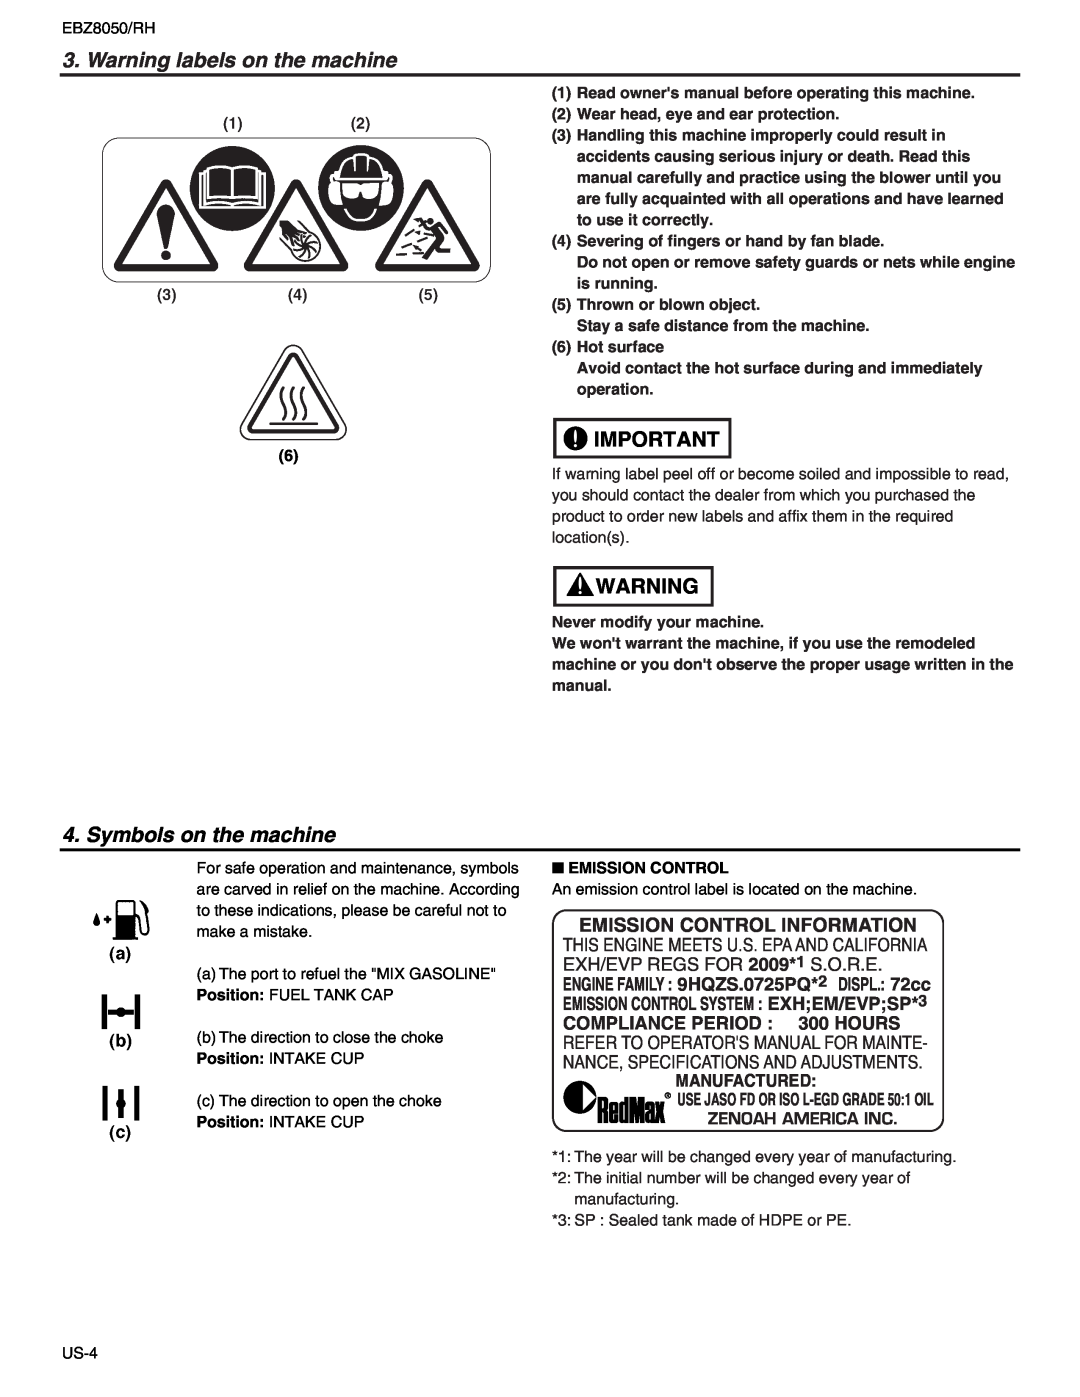 RedMax EBZ8050RH manual Warning labels on the machine, Symbols on the machine, Emission Control Information 